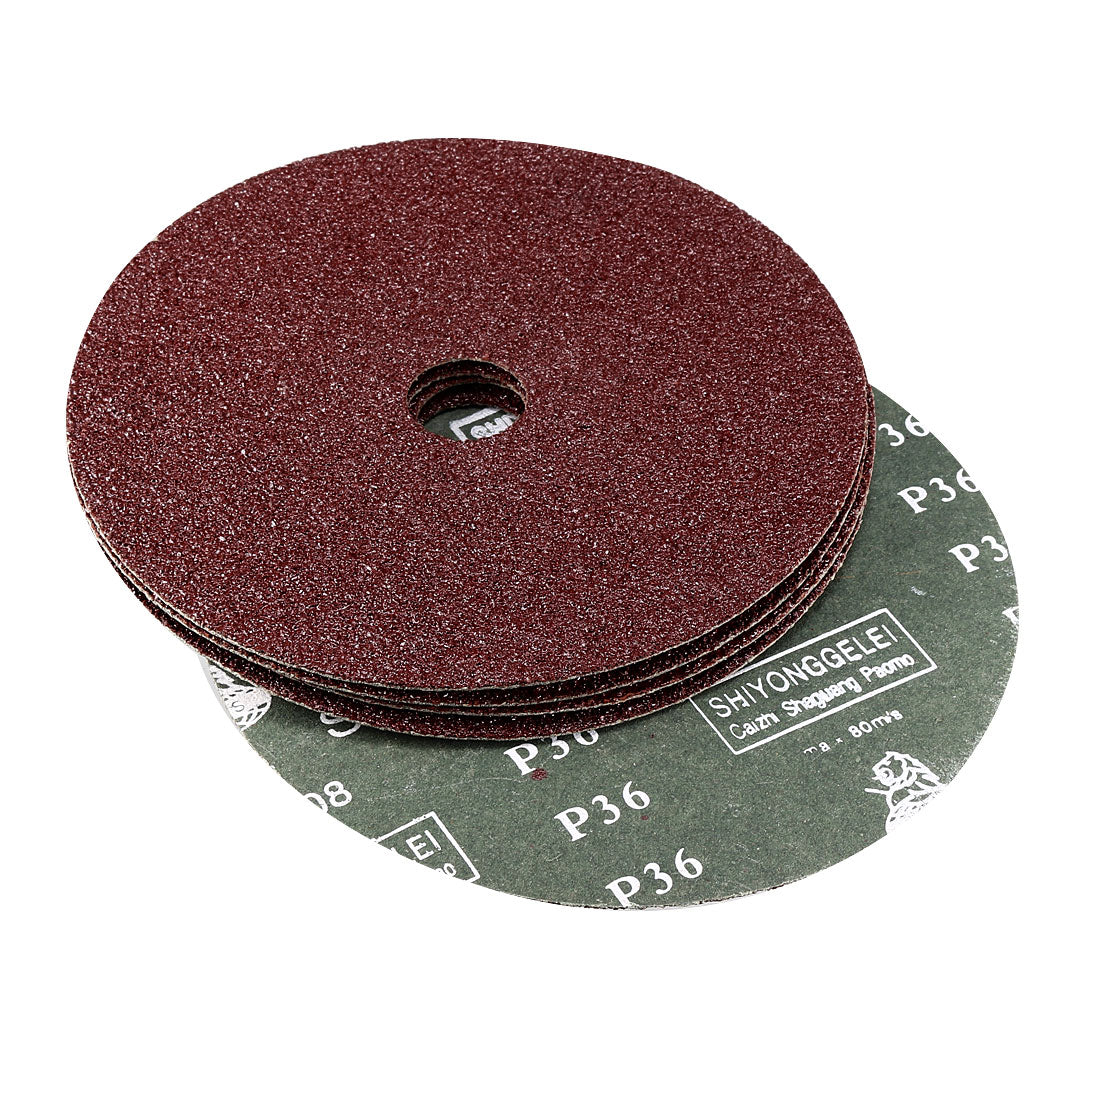 Uxcell Uxcell 6-Inch x 7/8-Inch Aluminum Oxide Resin Fiber Discs, Center Hole 120 Grit Sanding Grinding Discs, 5 Pcs